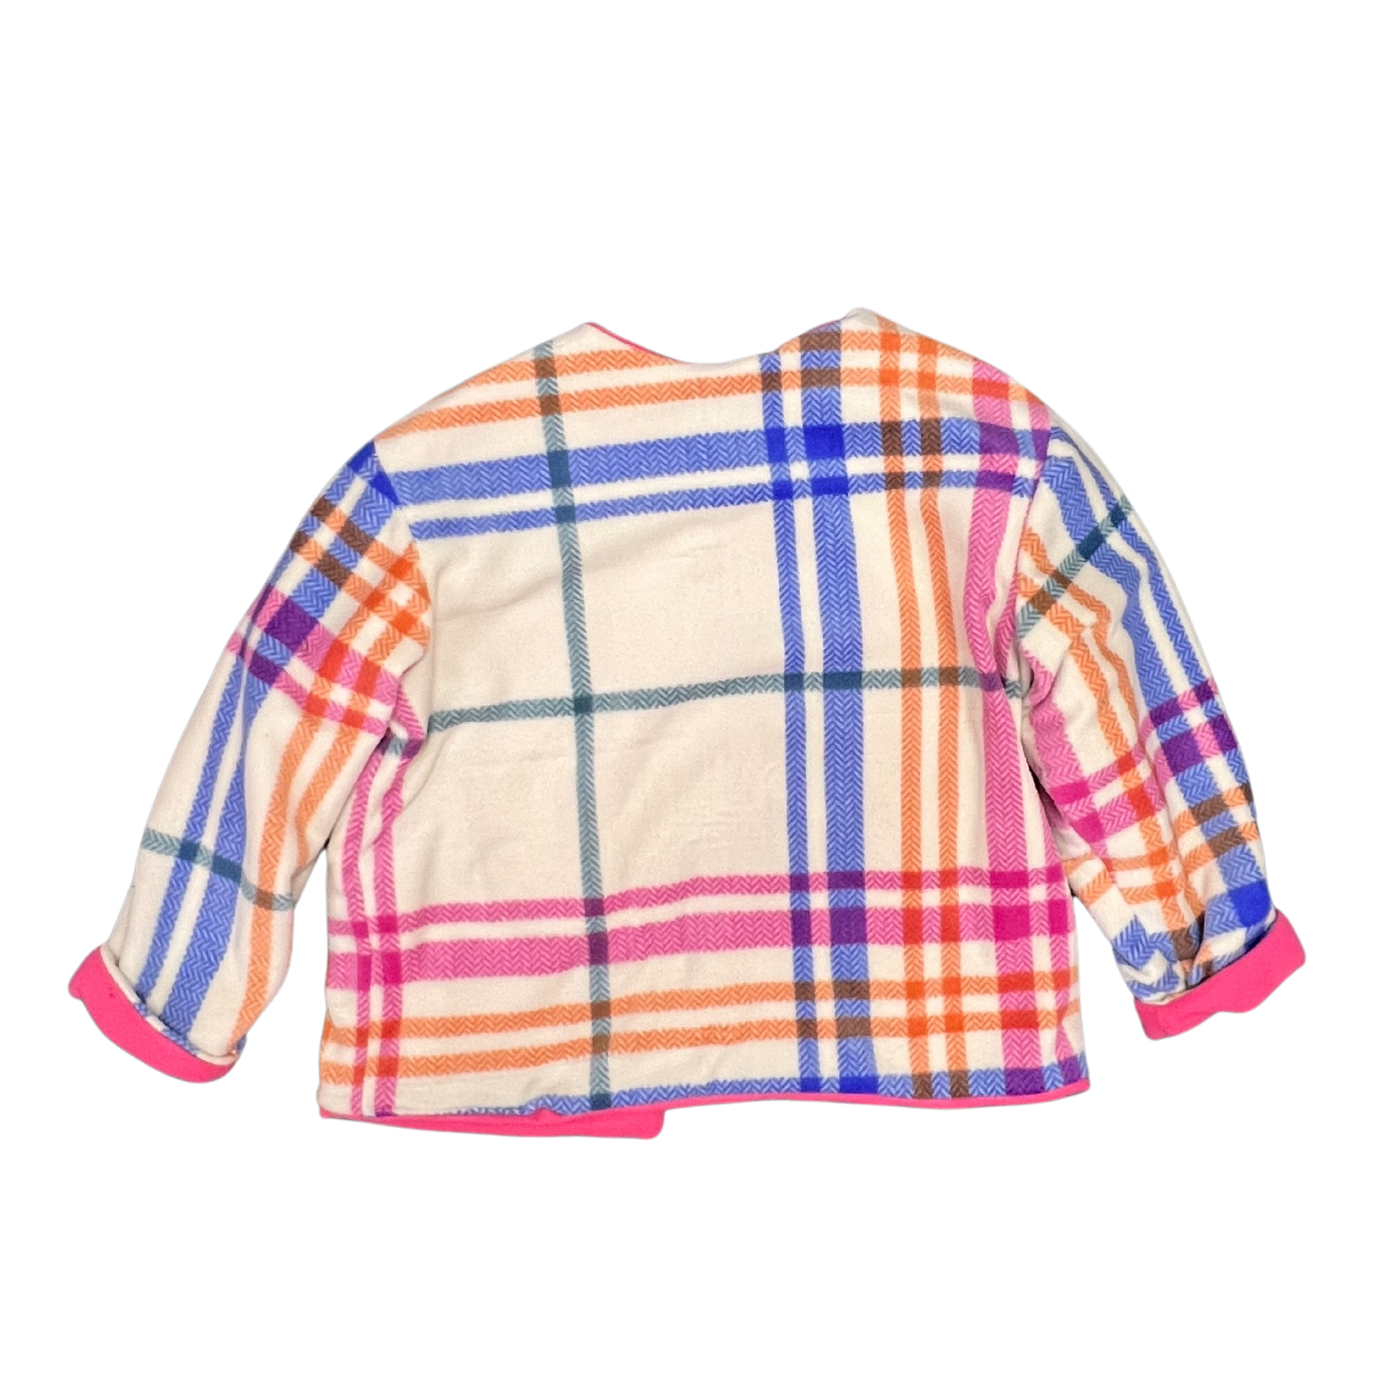 Colorful Plaid Fleece Chore Jacket with Pockets 2X/3X